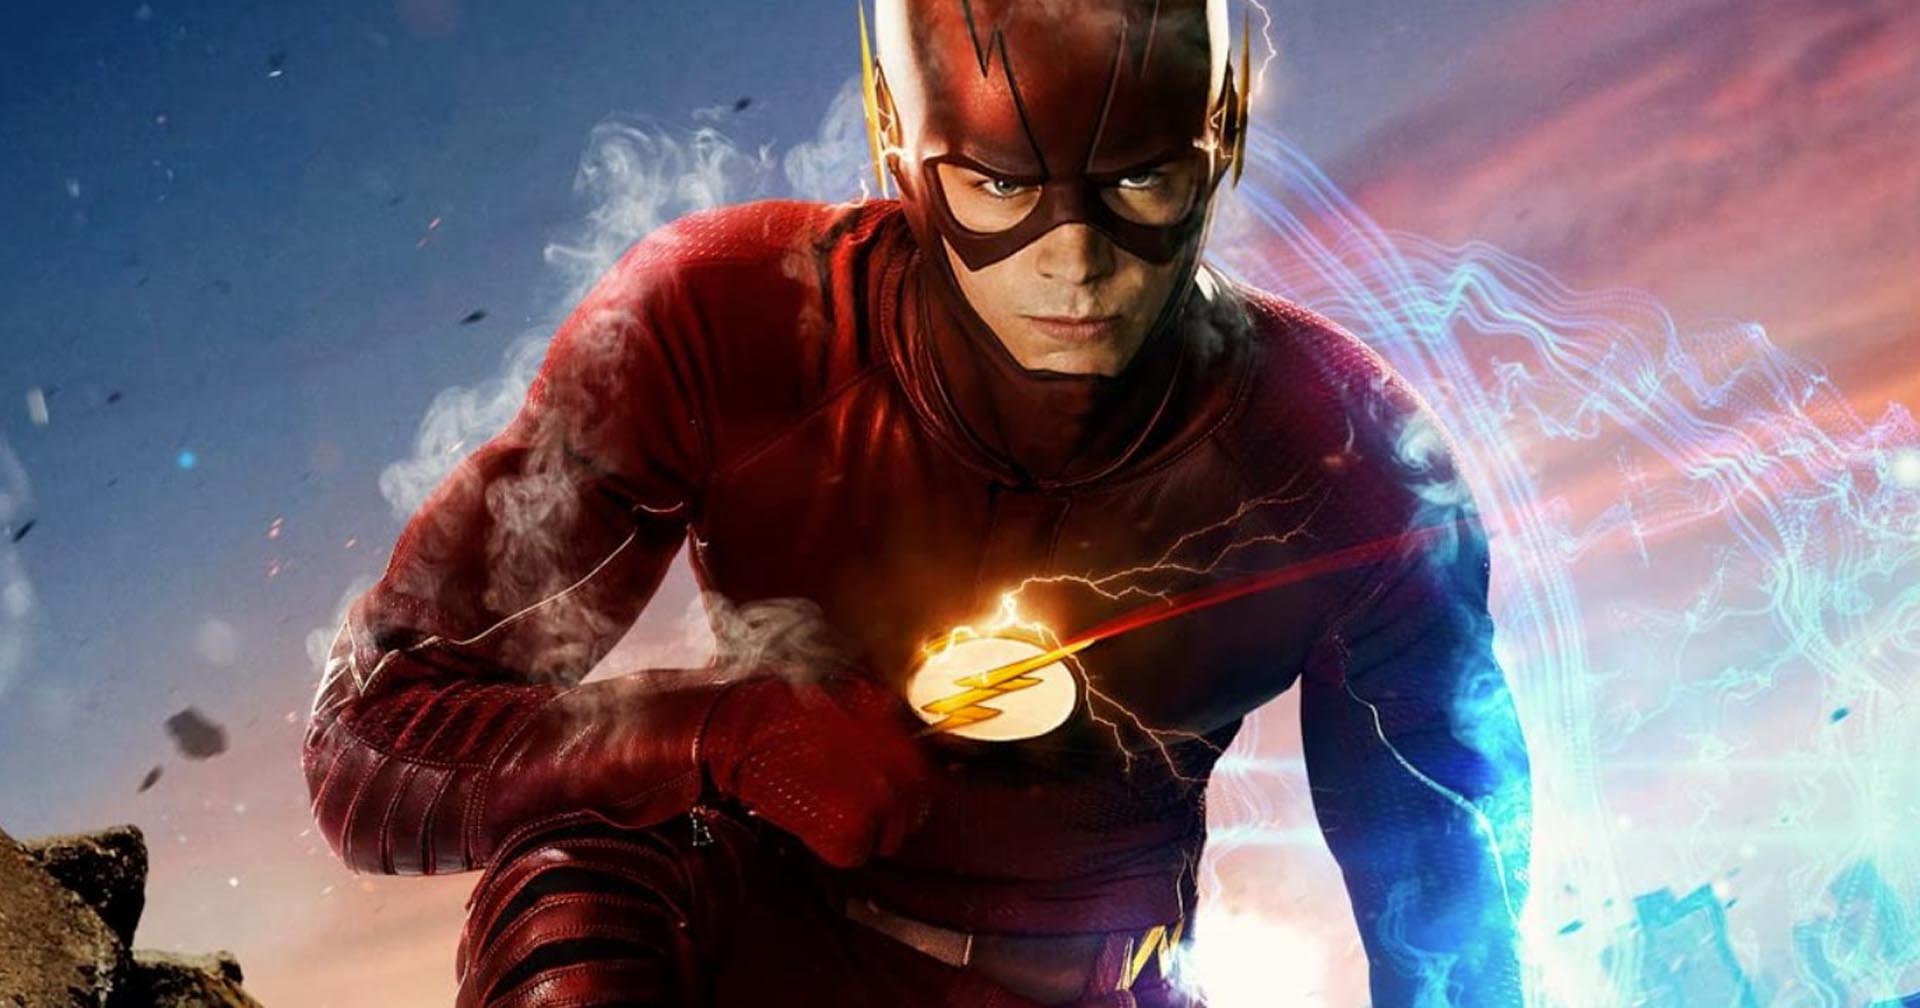 ‘The Flash’ ซีซัน 9 จะเป็นเรื่องราวปิดฉากจักรวาล Arrowverse